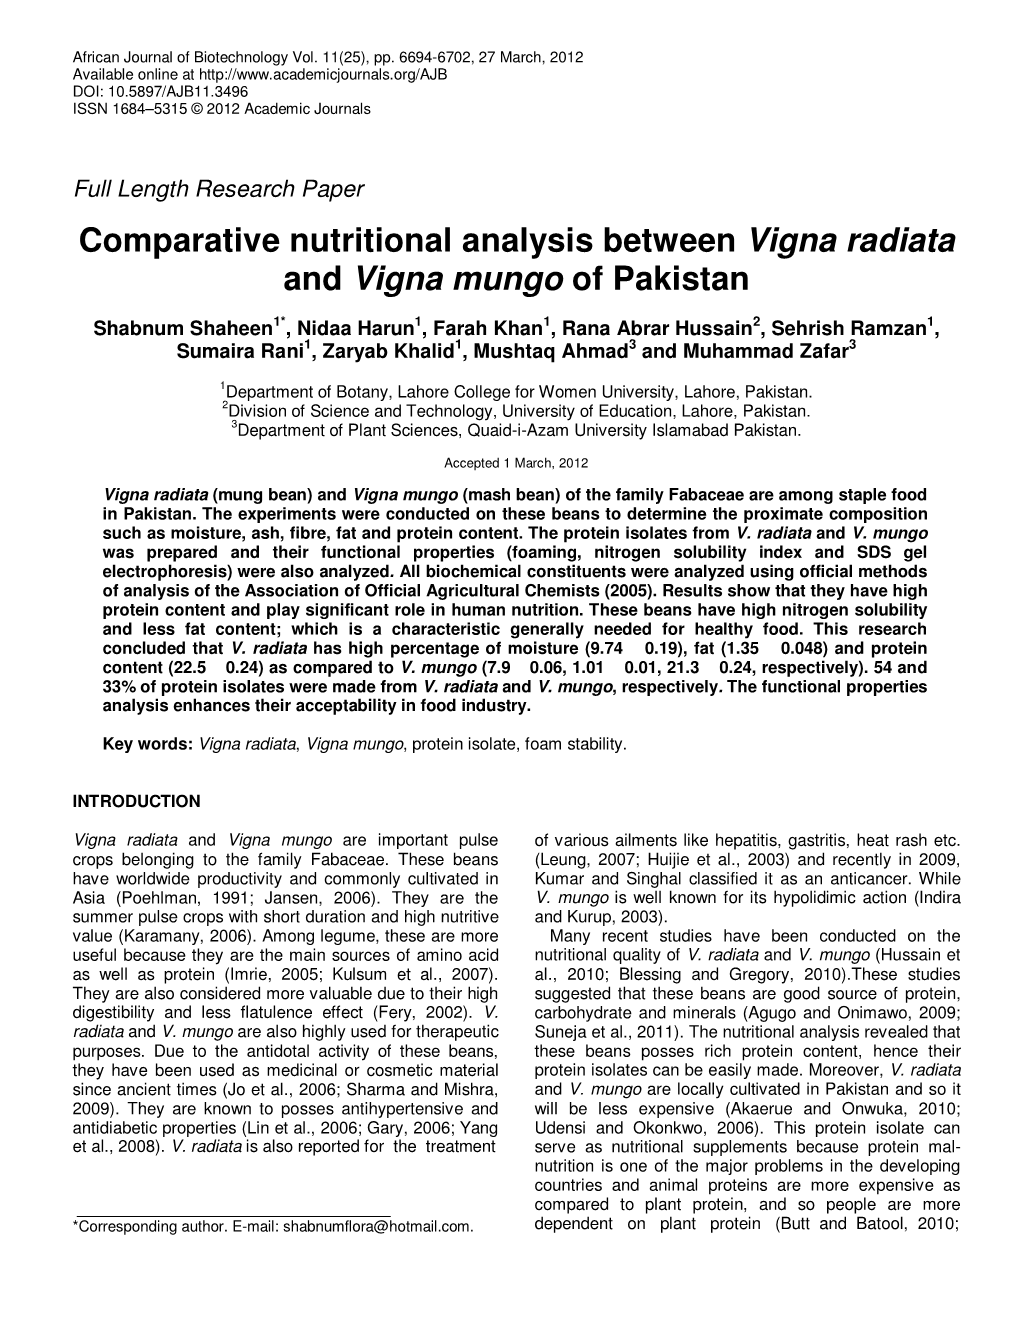 Comparative Nutritional Analysis Between Vigna Radiata and Vigna Mungo of Pakistan